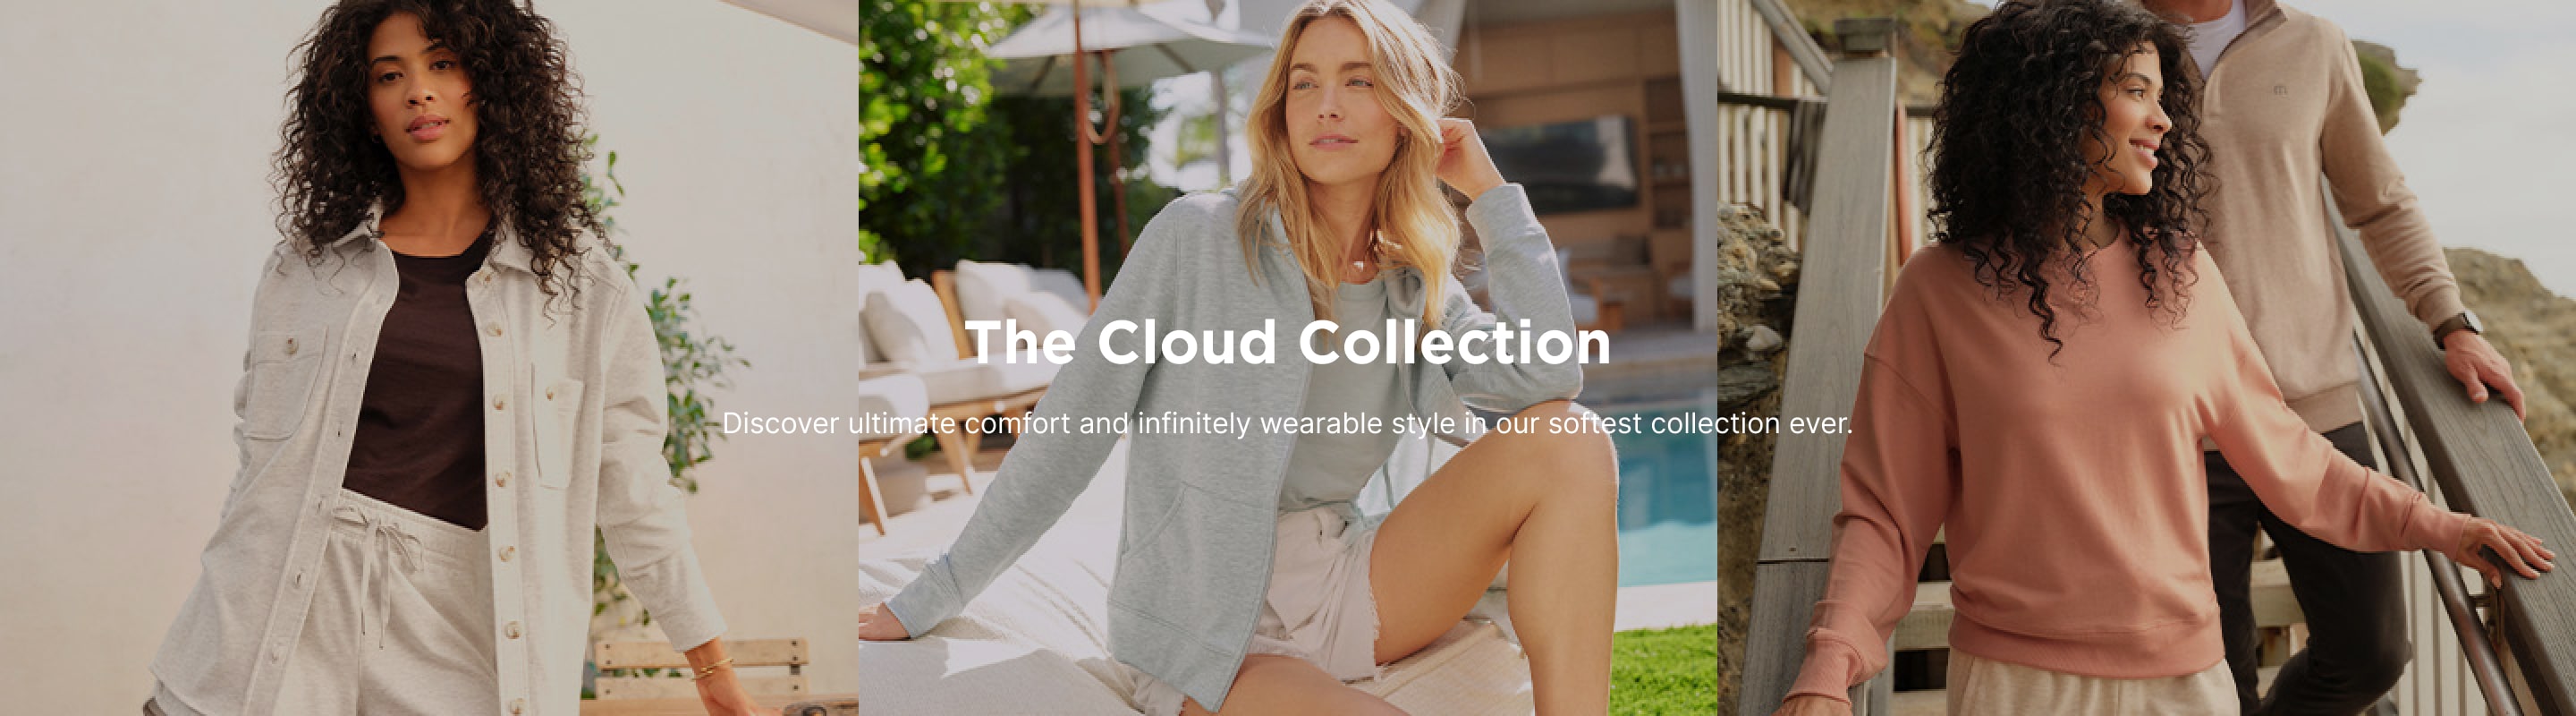 The Cloud Collection, Women, TM